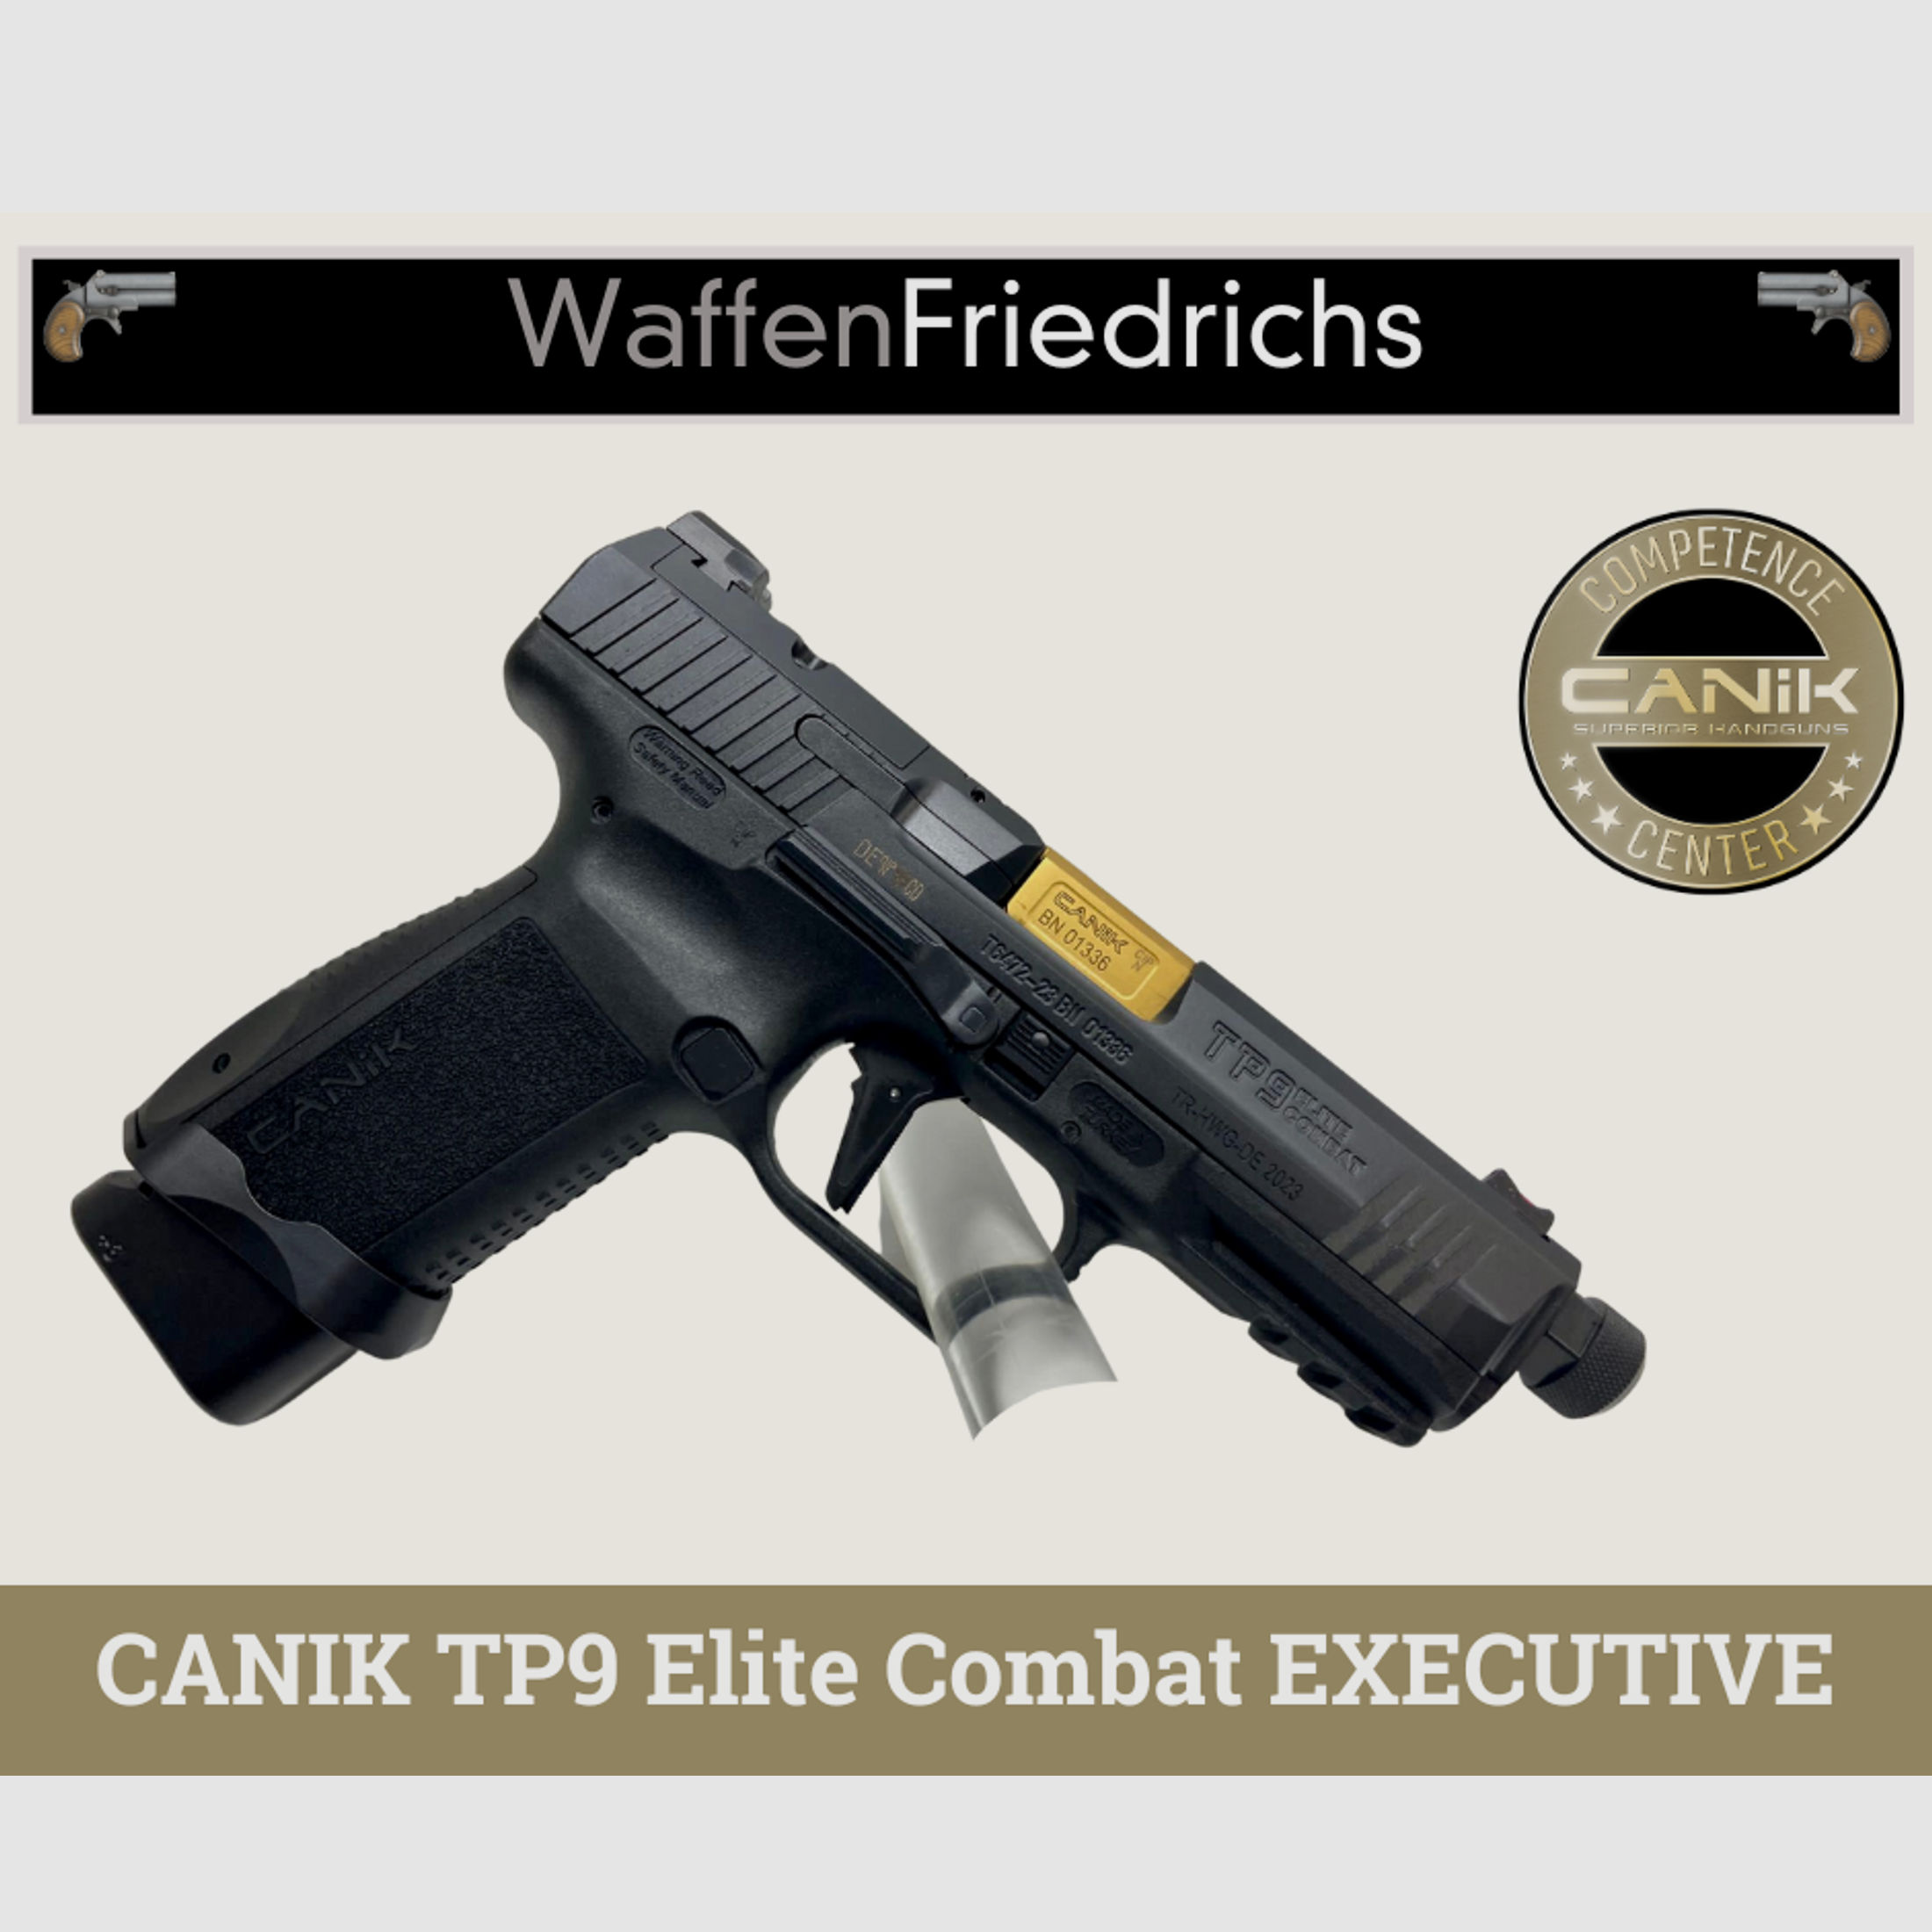 CANIK TP9 Elite Combat EXECUTIVE - WaffenFriedrichs